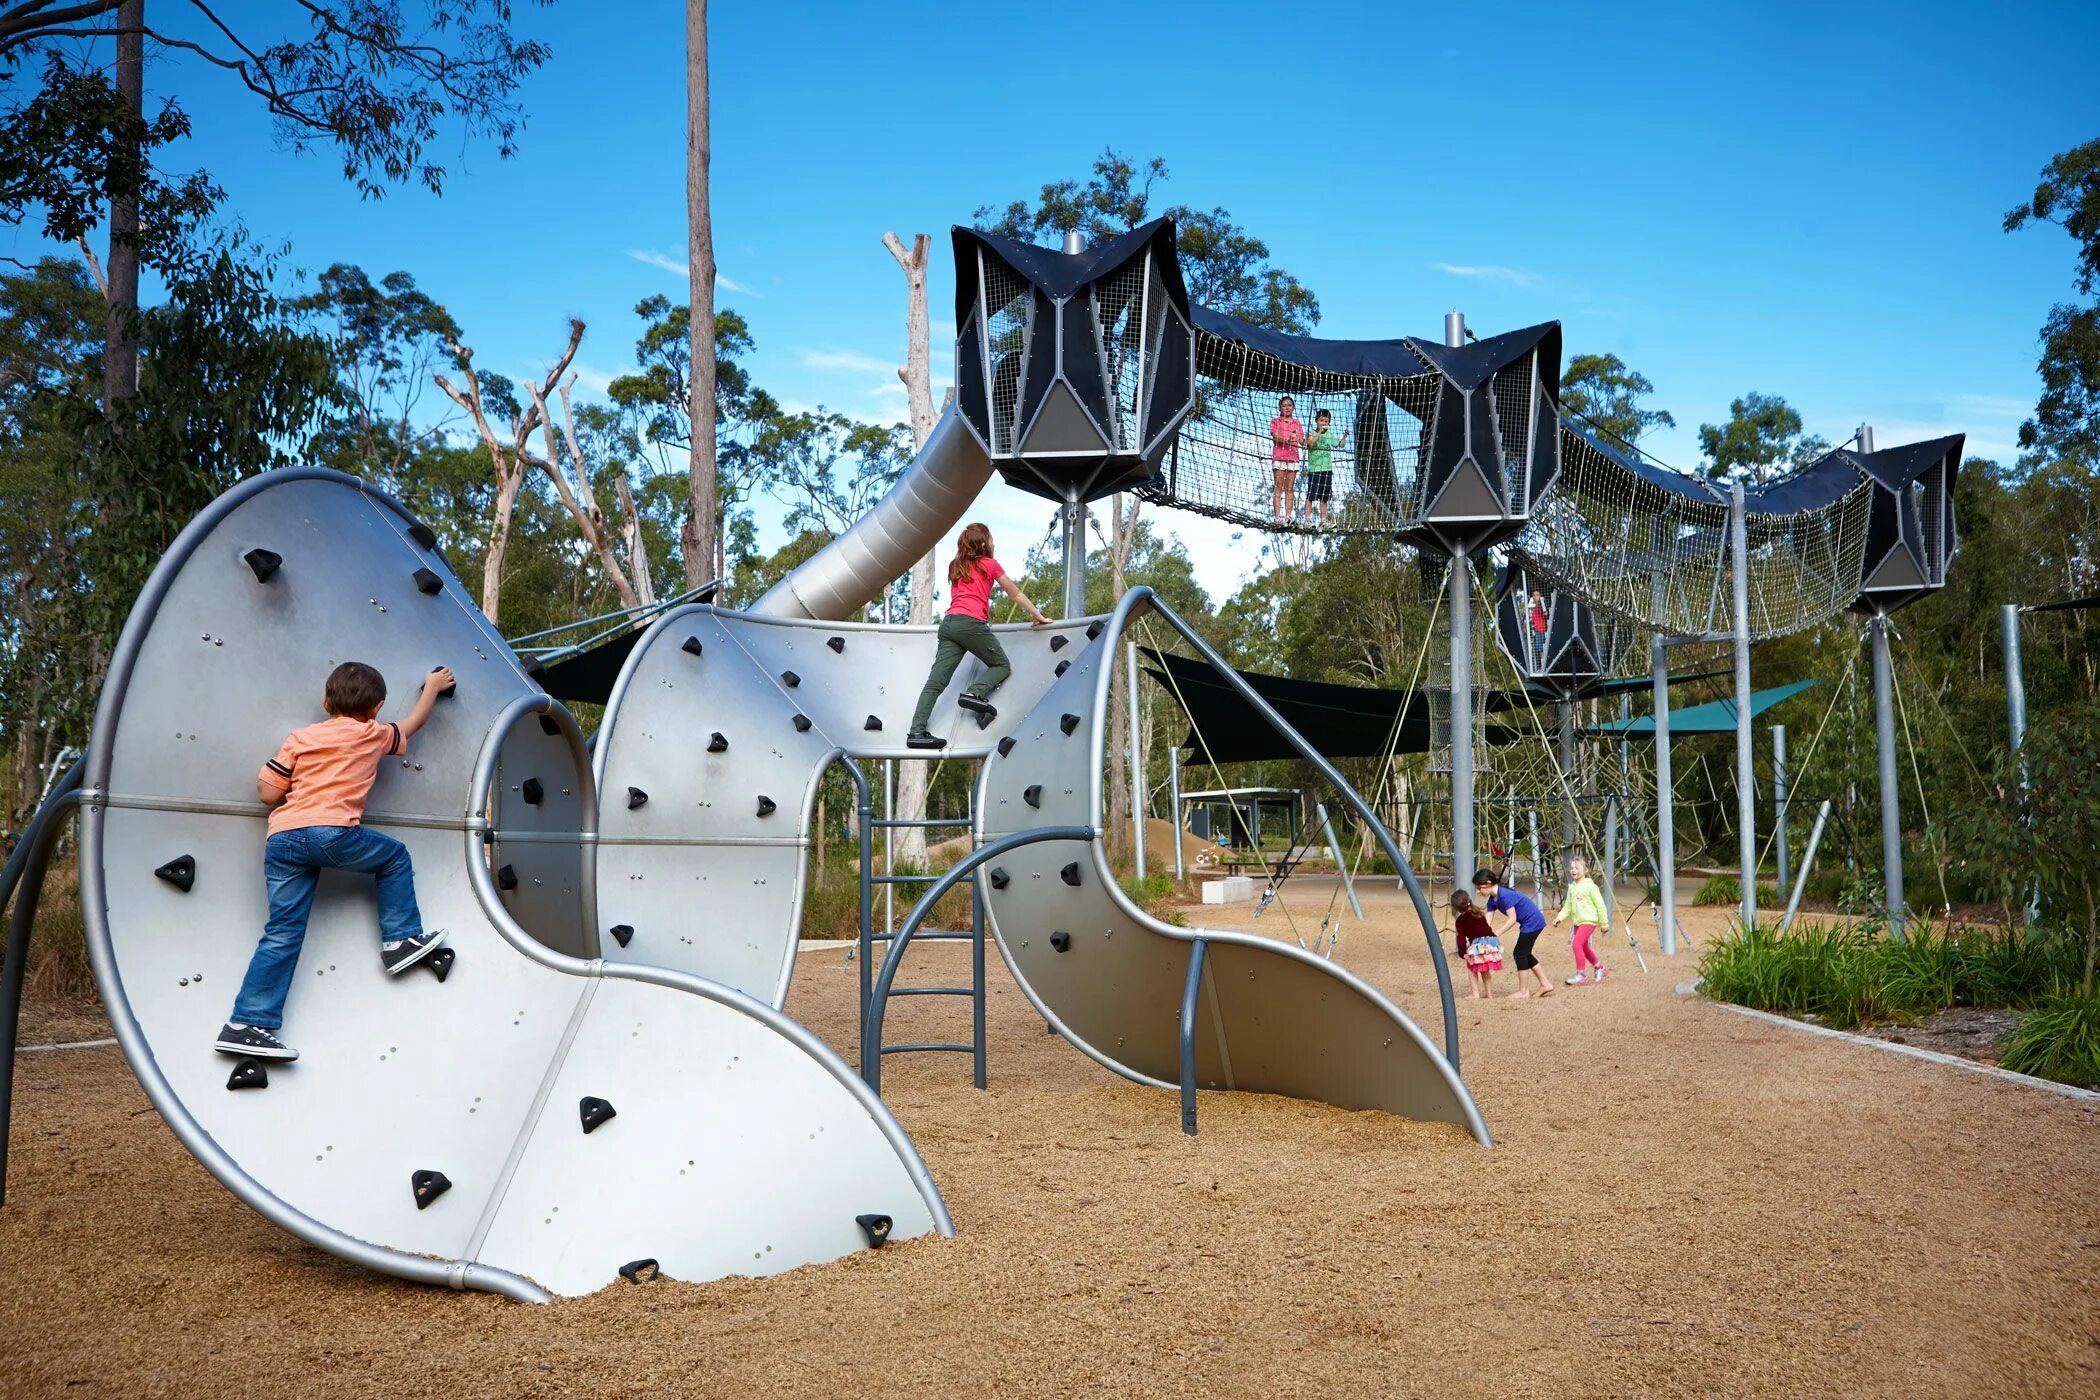 The Playground. Playground at the Park. Kids детская площадка panties.